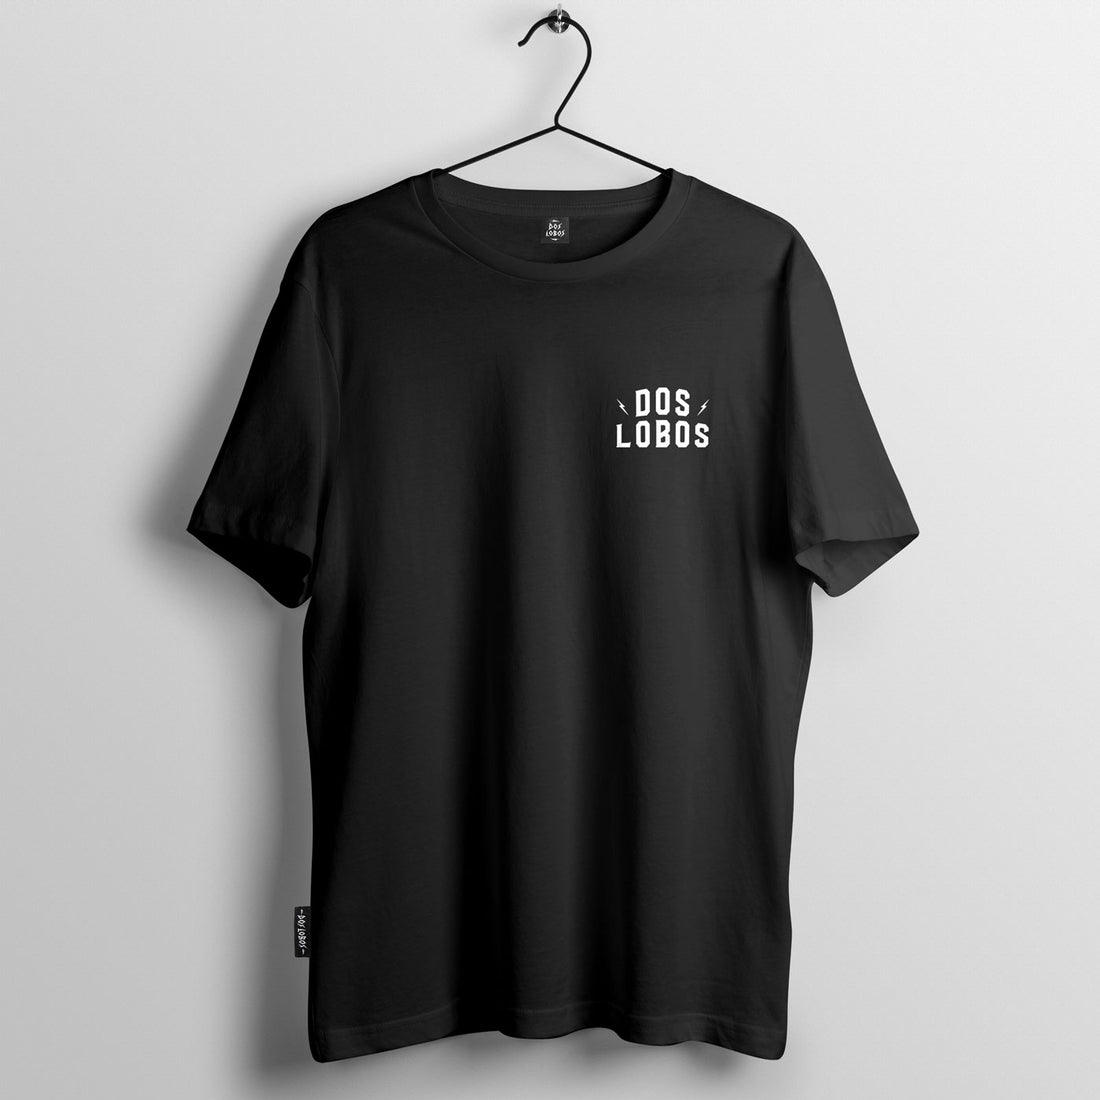 Short Sleeve Cotton T-Shirt By Dos Lobos -  Dos loBOS hIGH